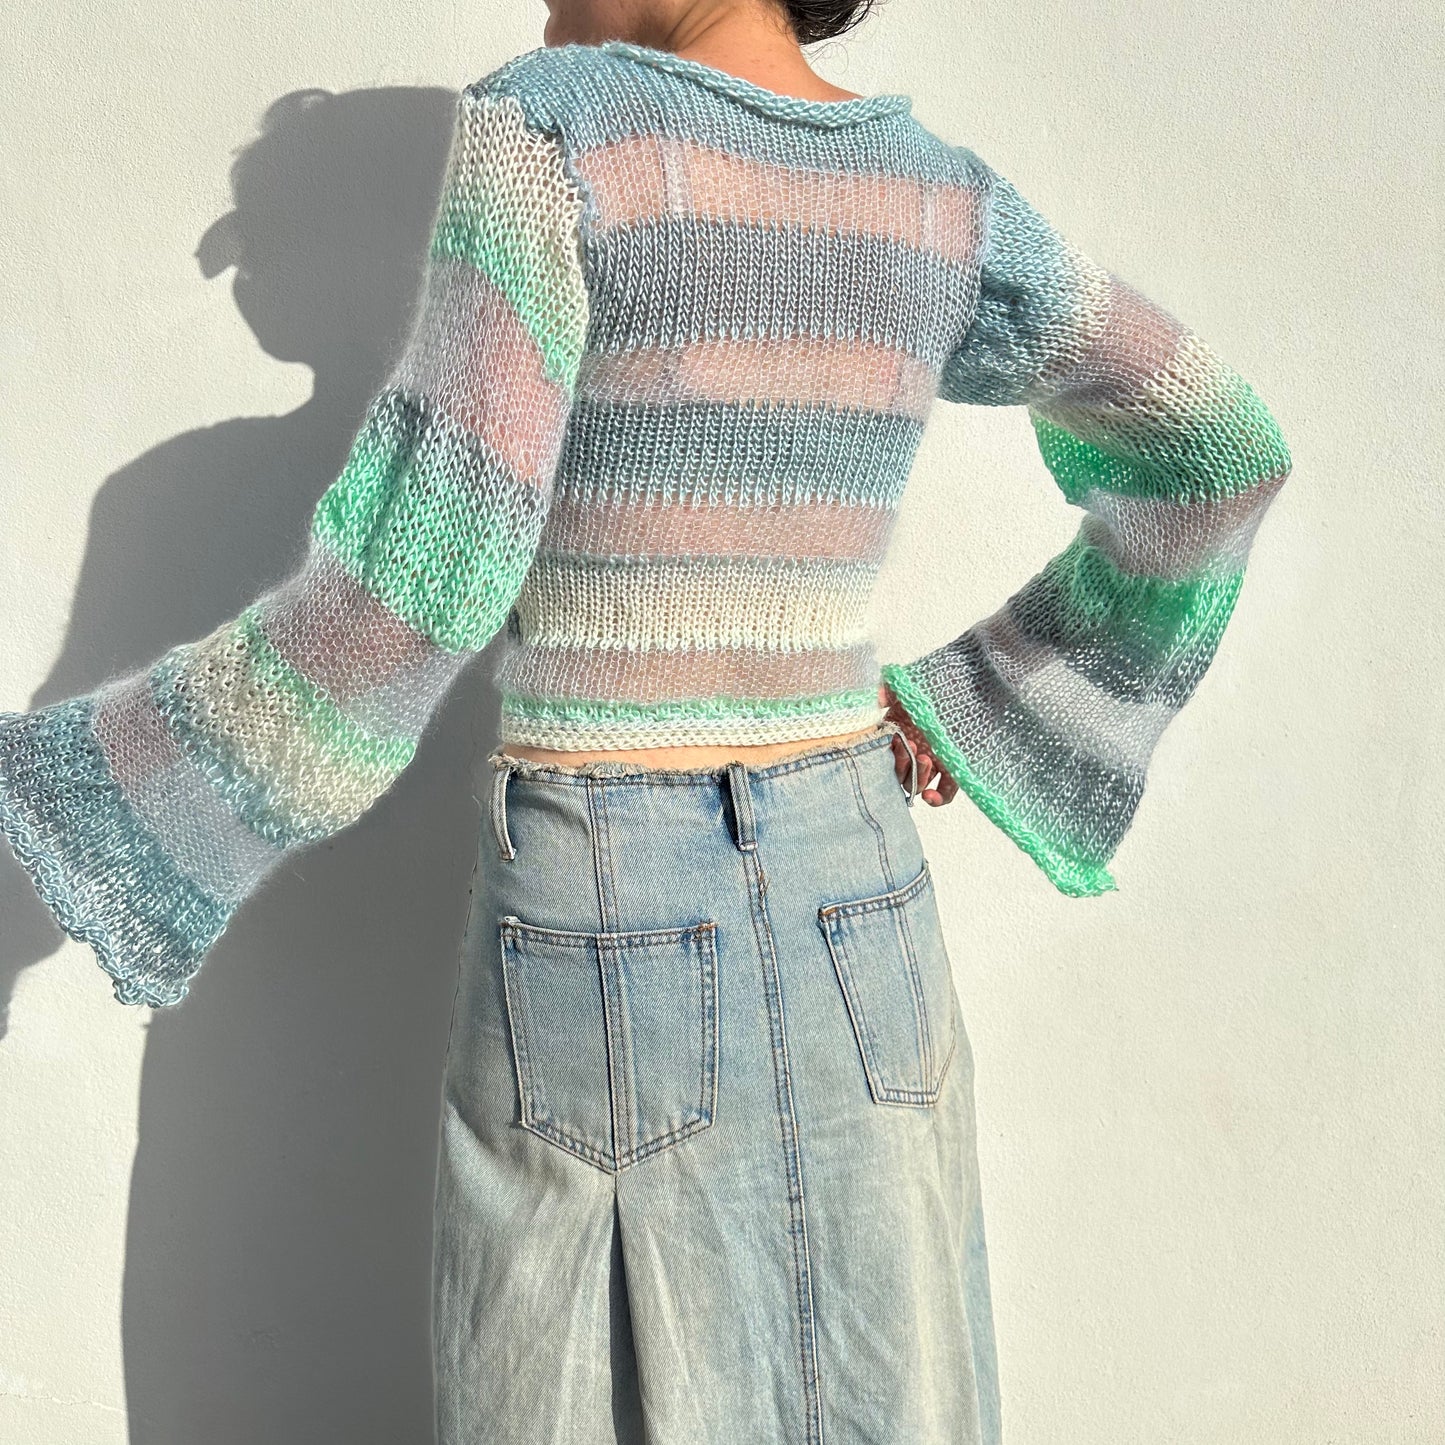 Handmade Sea Breeze striped mohair knitted jumper